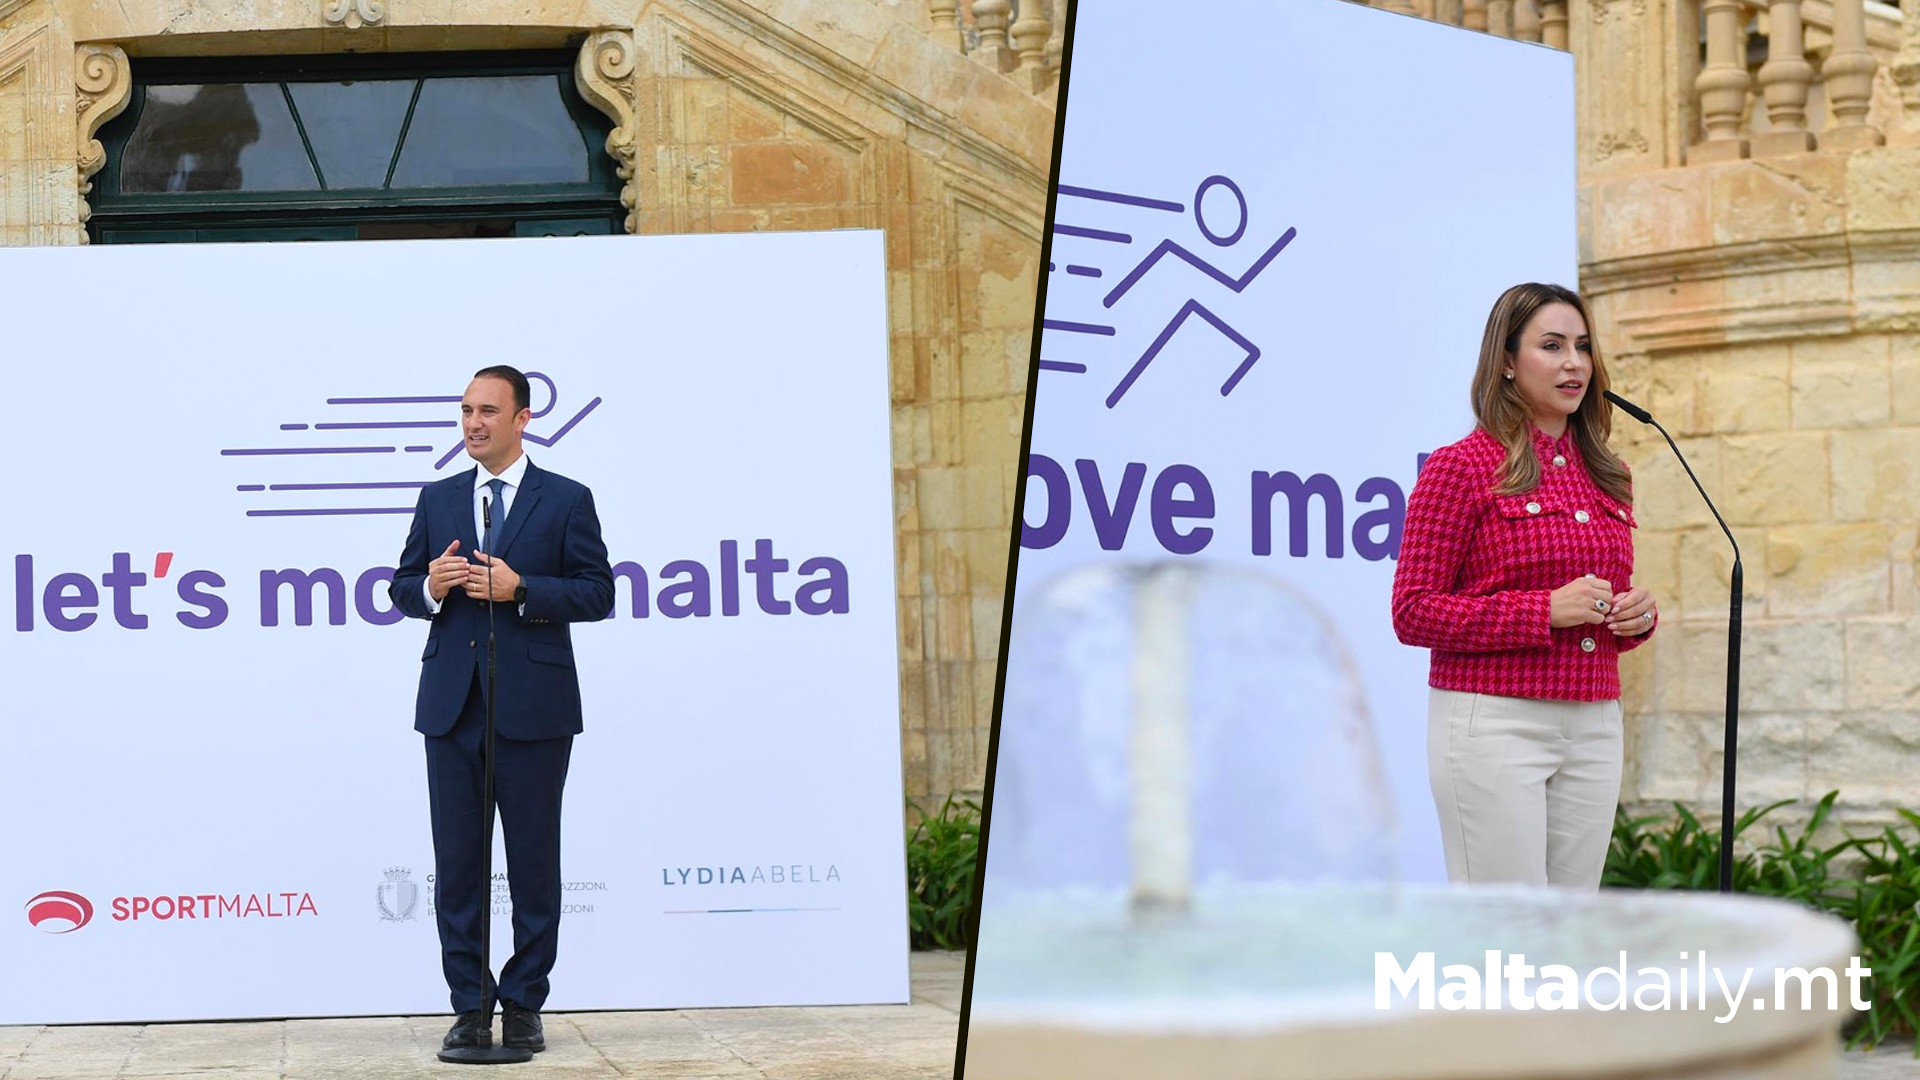 Let's Move Malta: Week Of Sport Activities Launched